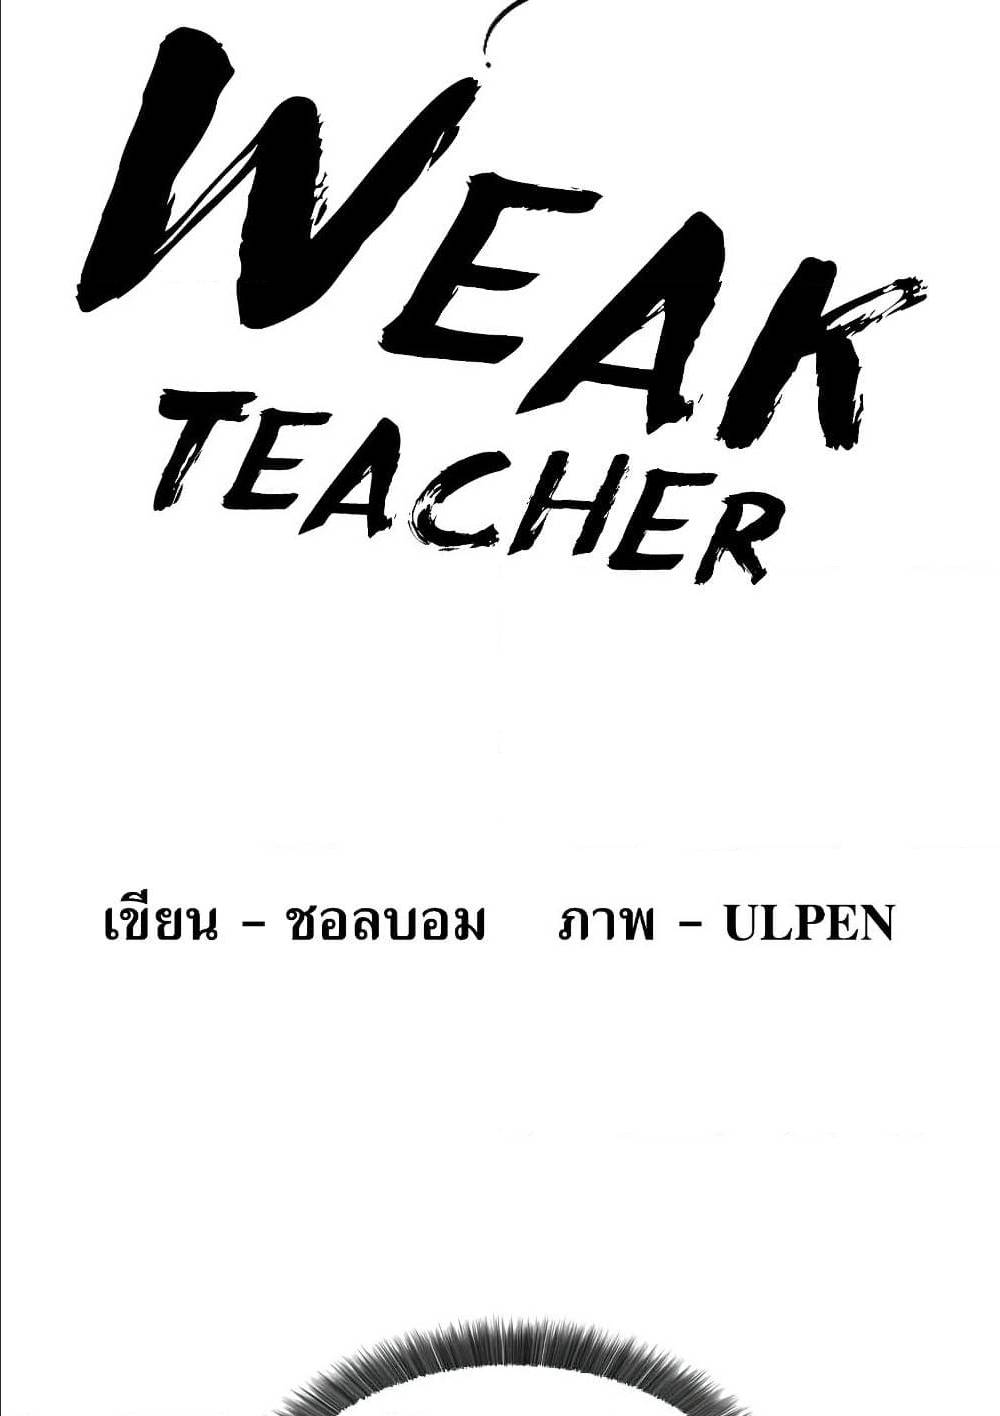 weak-teacher-9-24.jpg